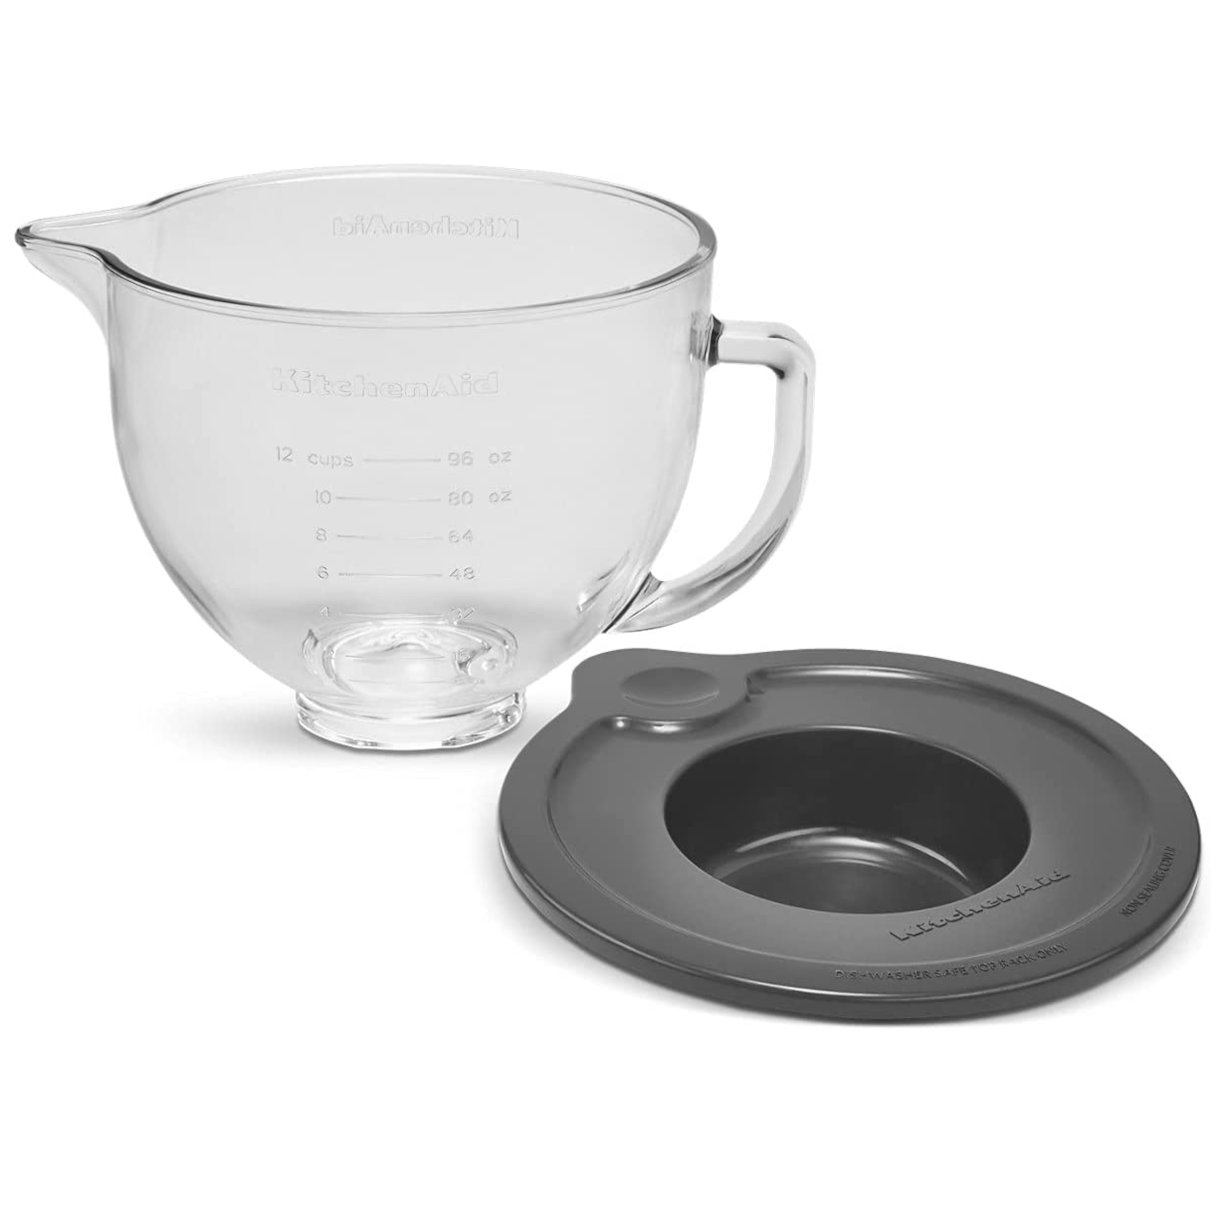 KitchenAid?? 5 Quart Tilt-Head Glass Bowl with Measurement Markings & Lid